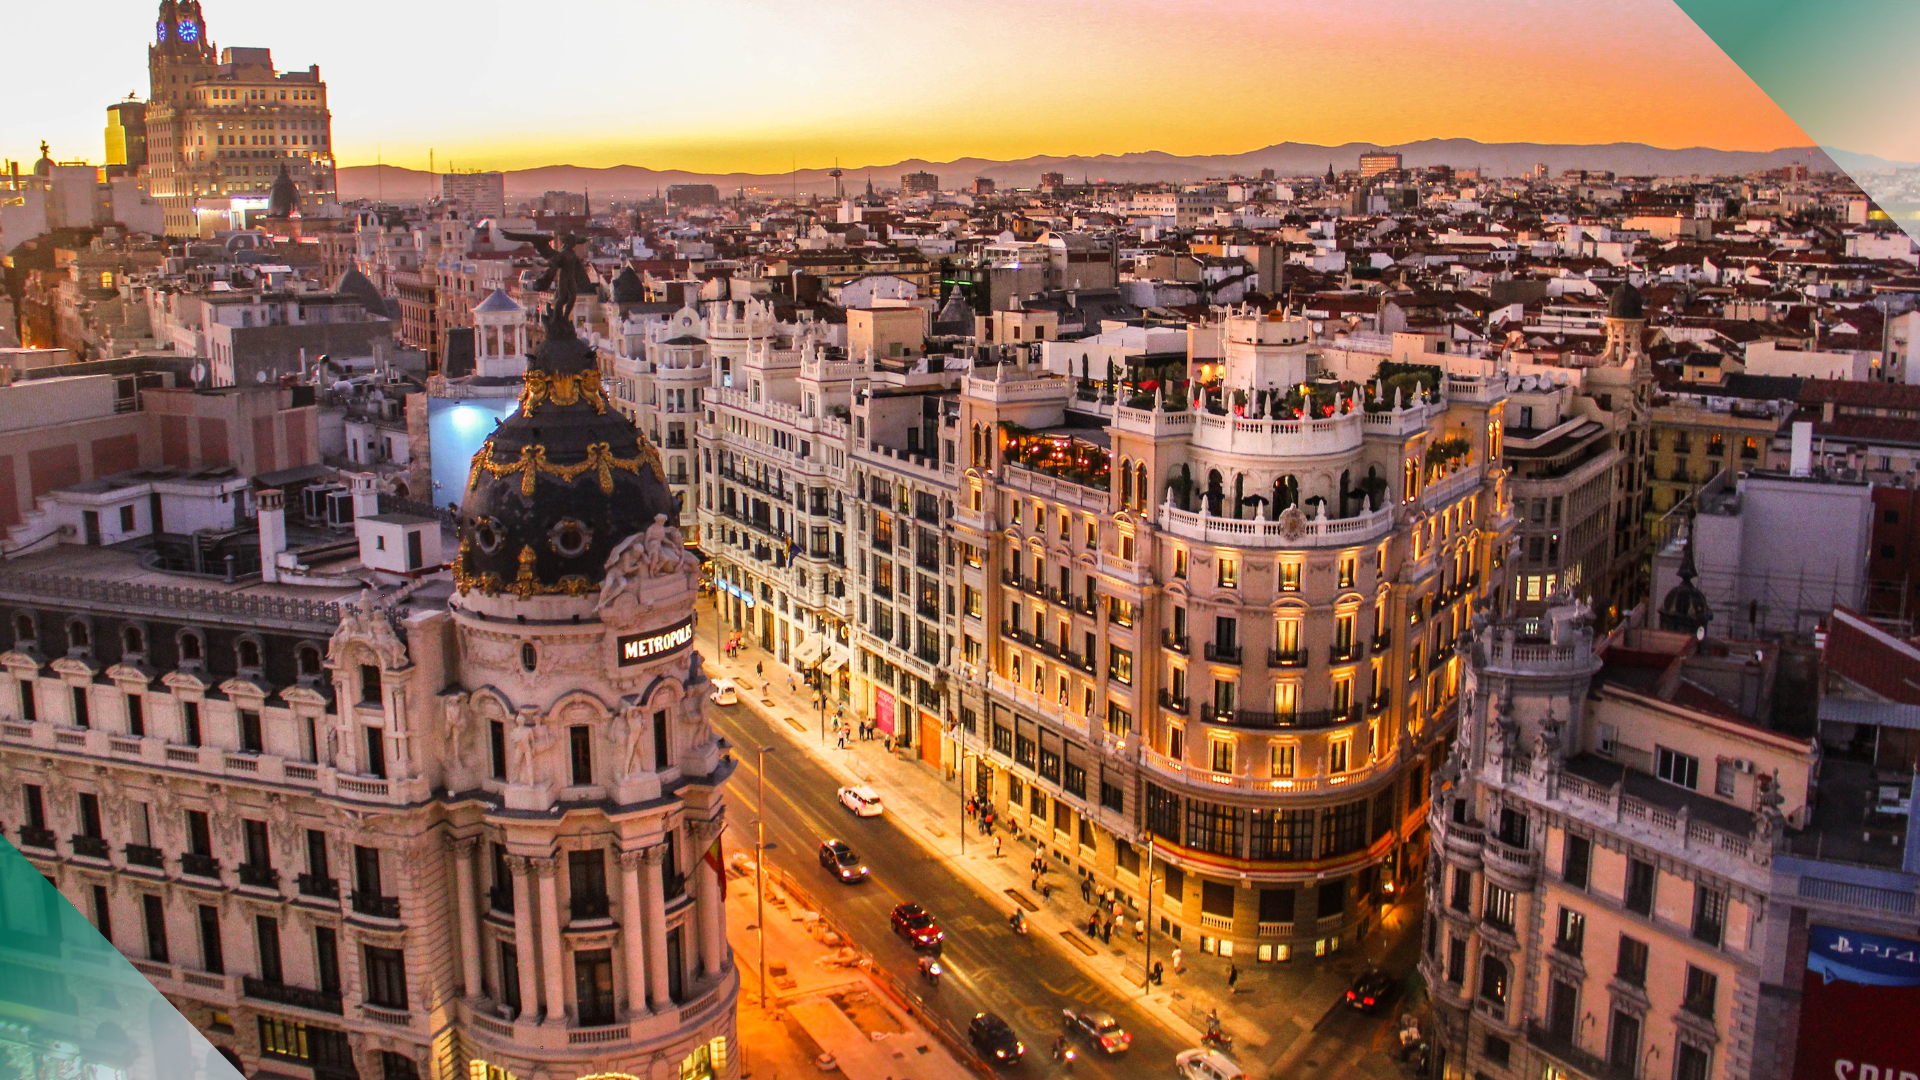 Madrid airbnb rules